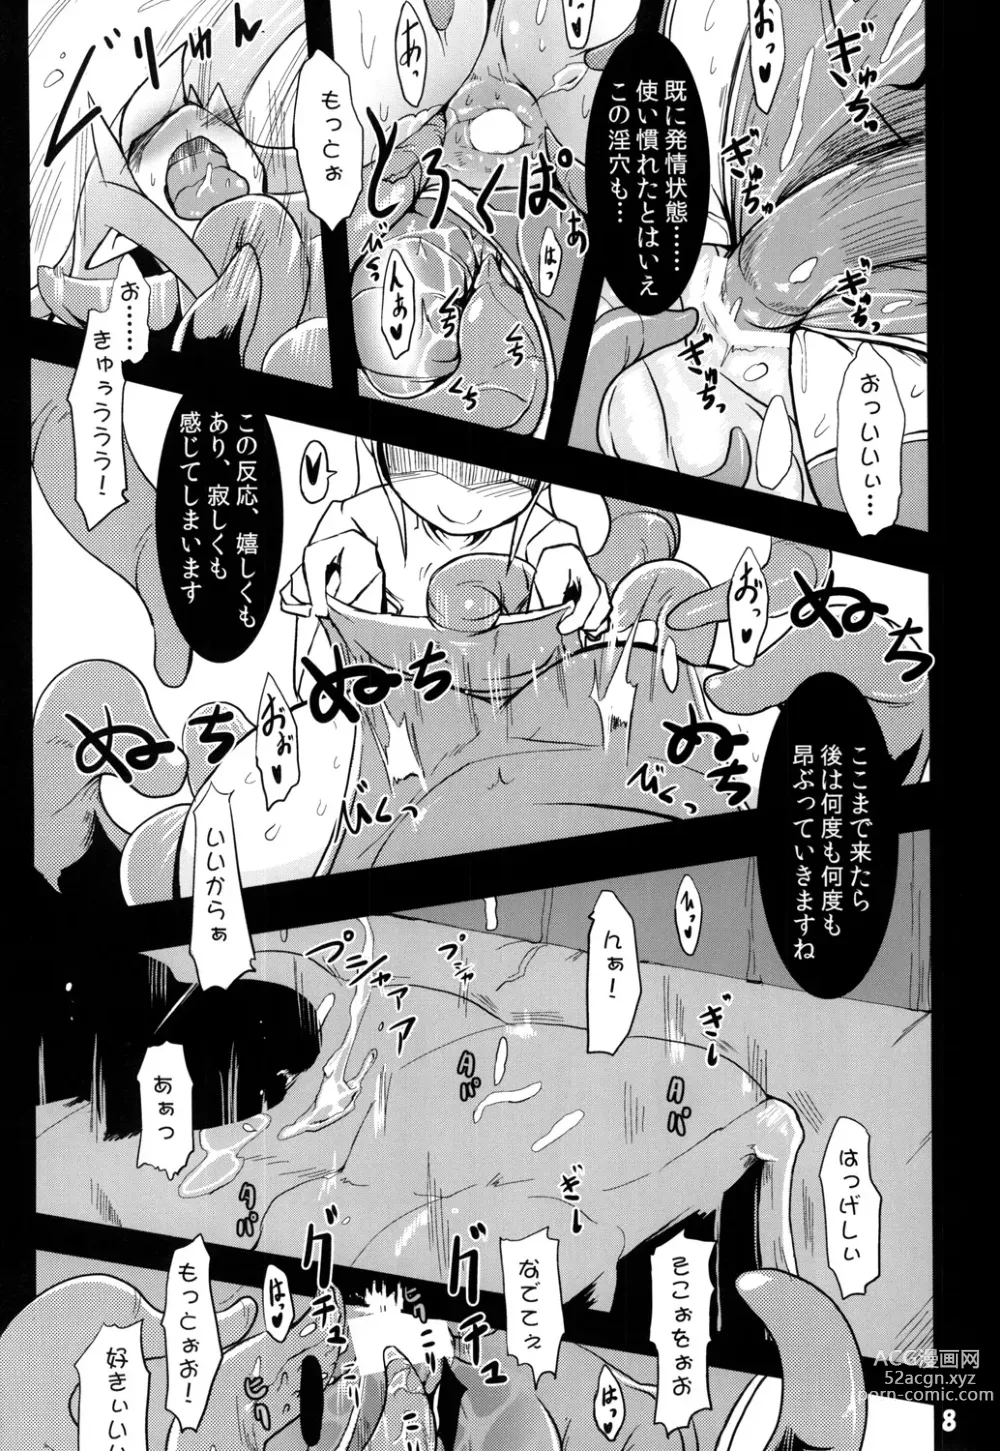 Page 9 of doujinshi Syoku 8